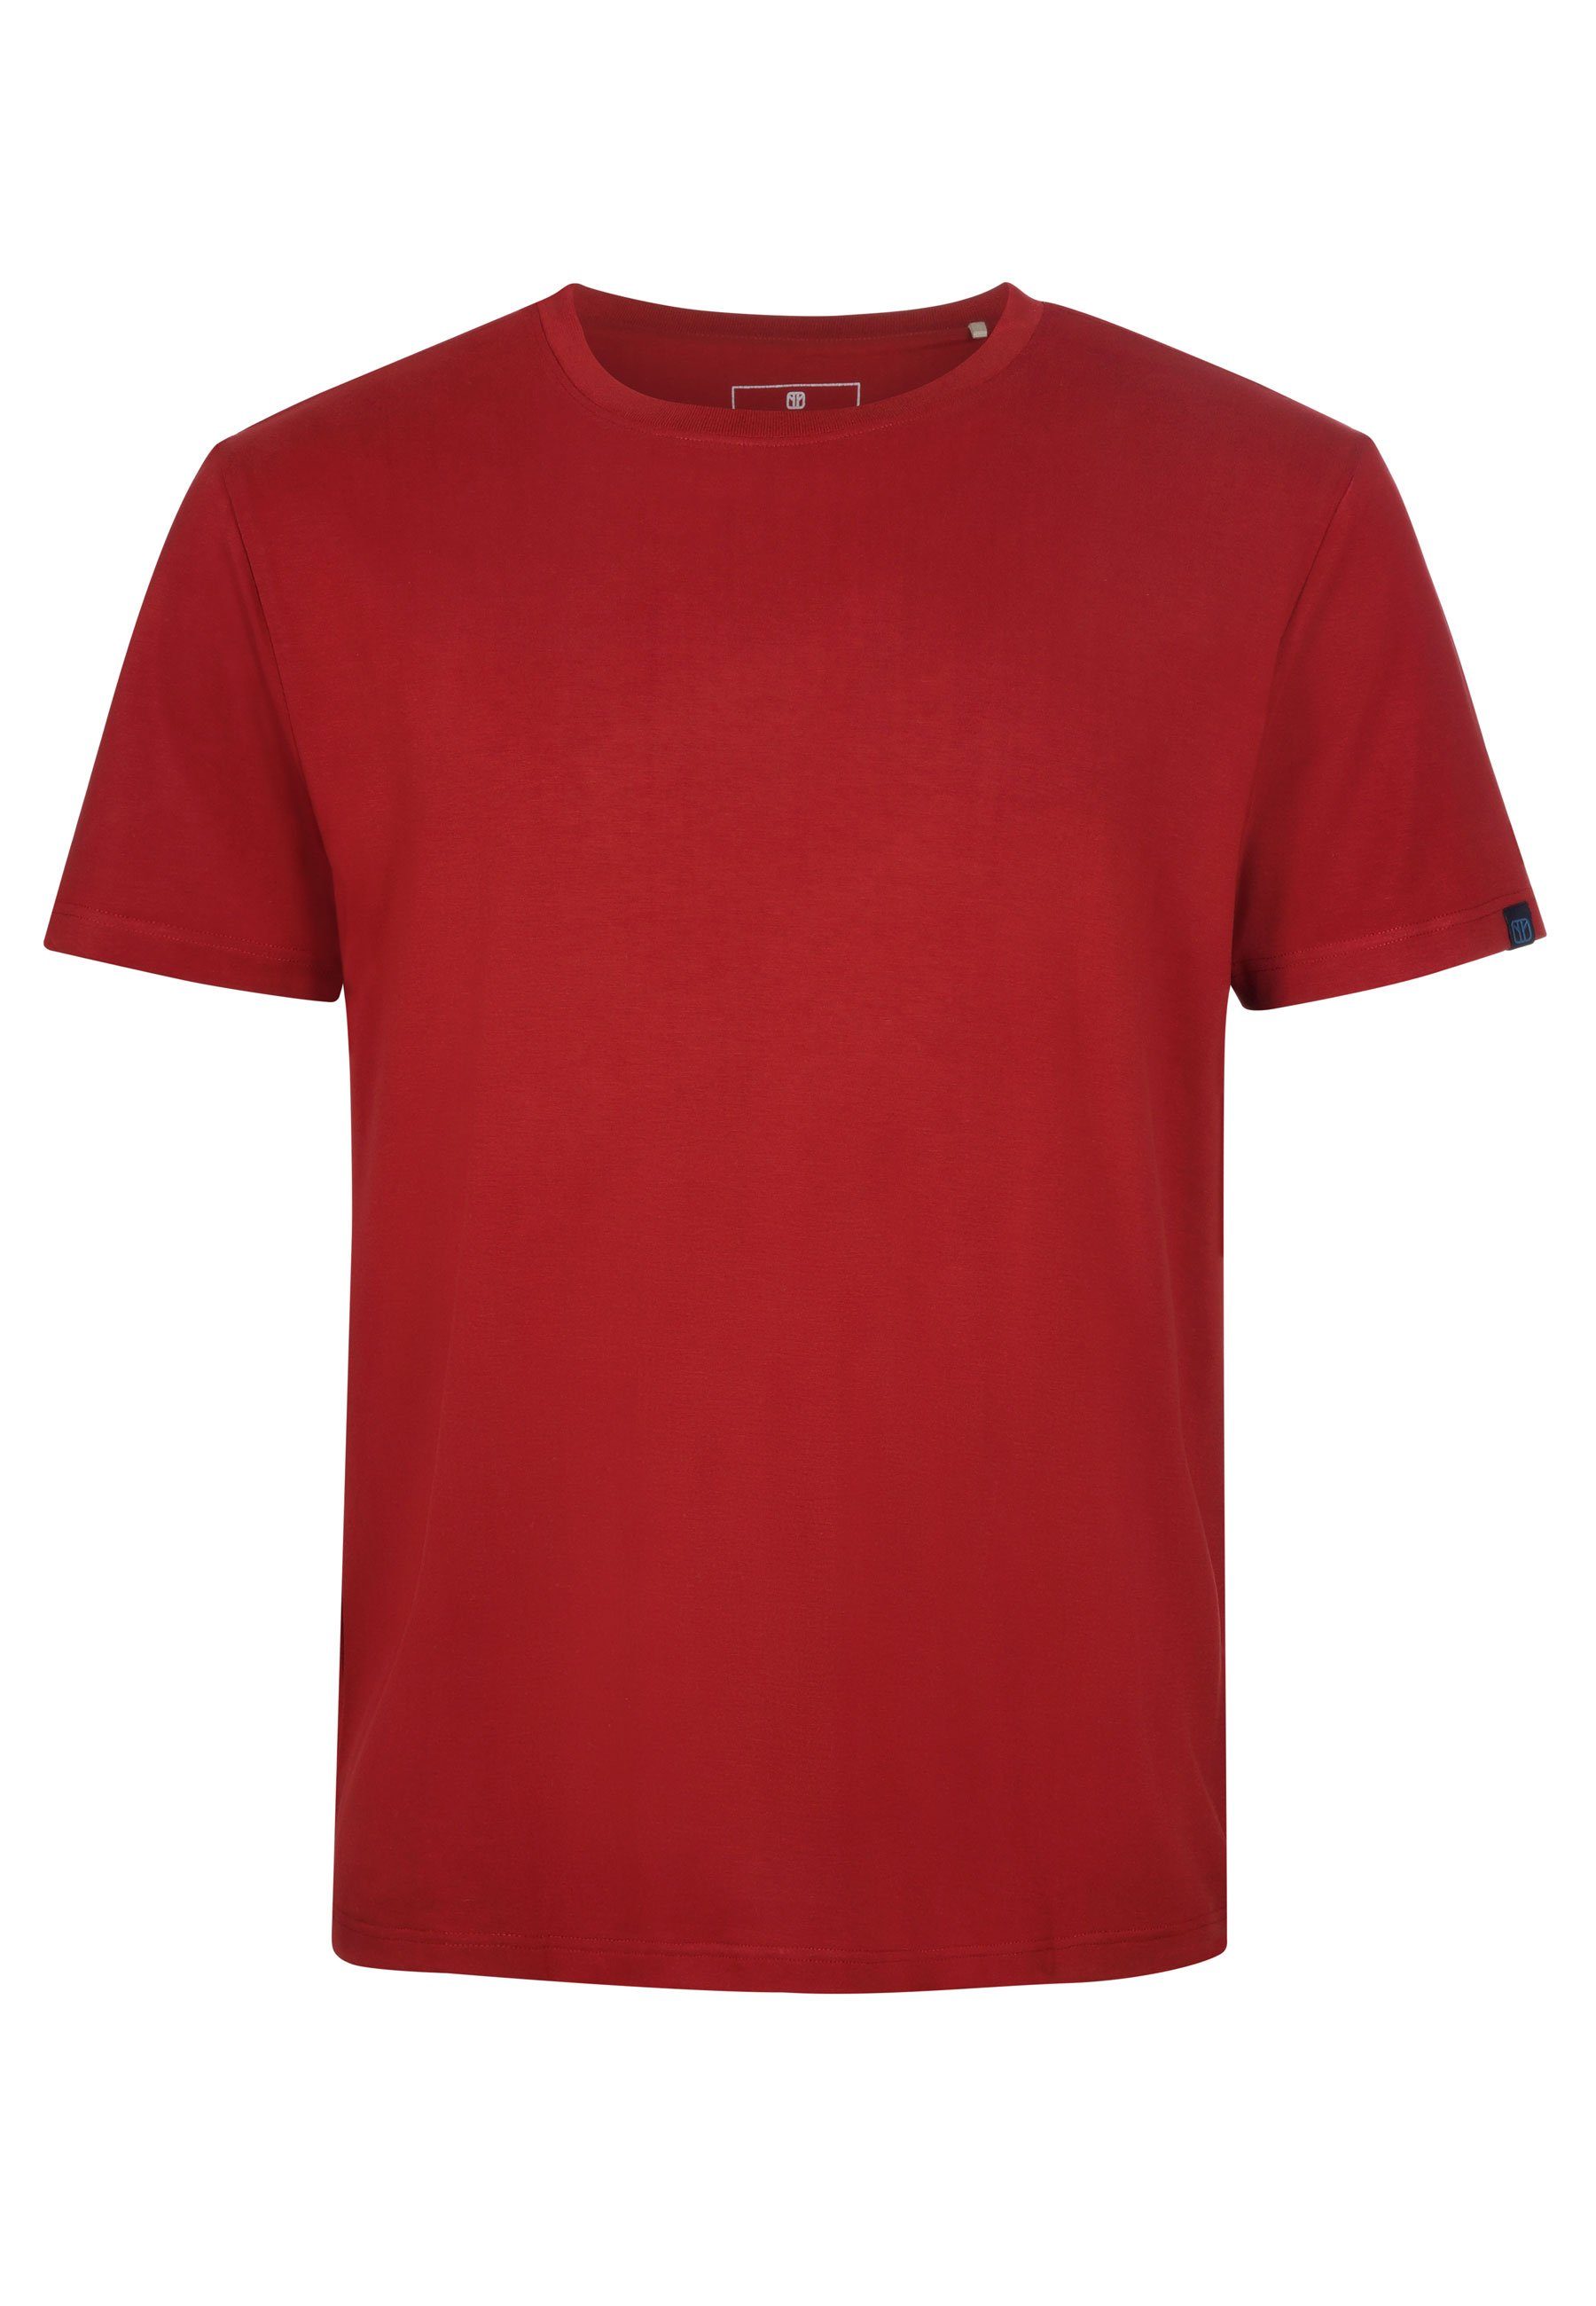 Elkline T-Shirt Bamboo Basic Kurzarm Jersey Shirt aus weichem Bambus Viskose syrahred | T-Shirts